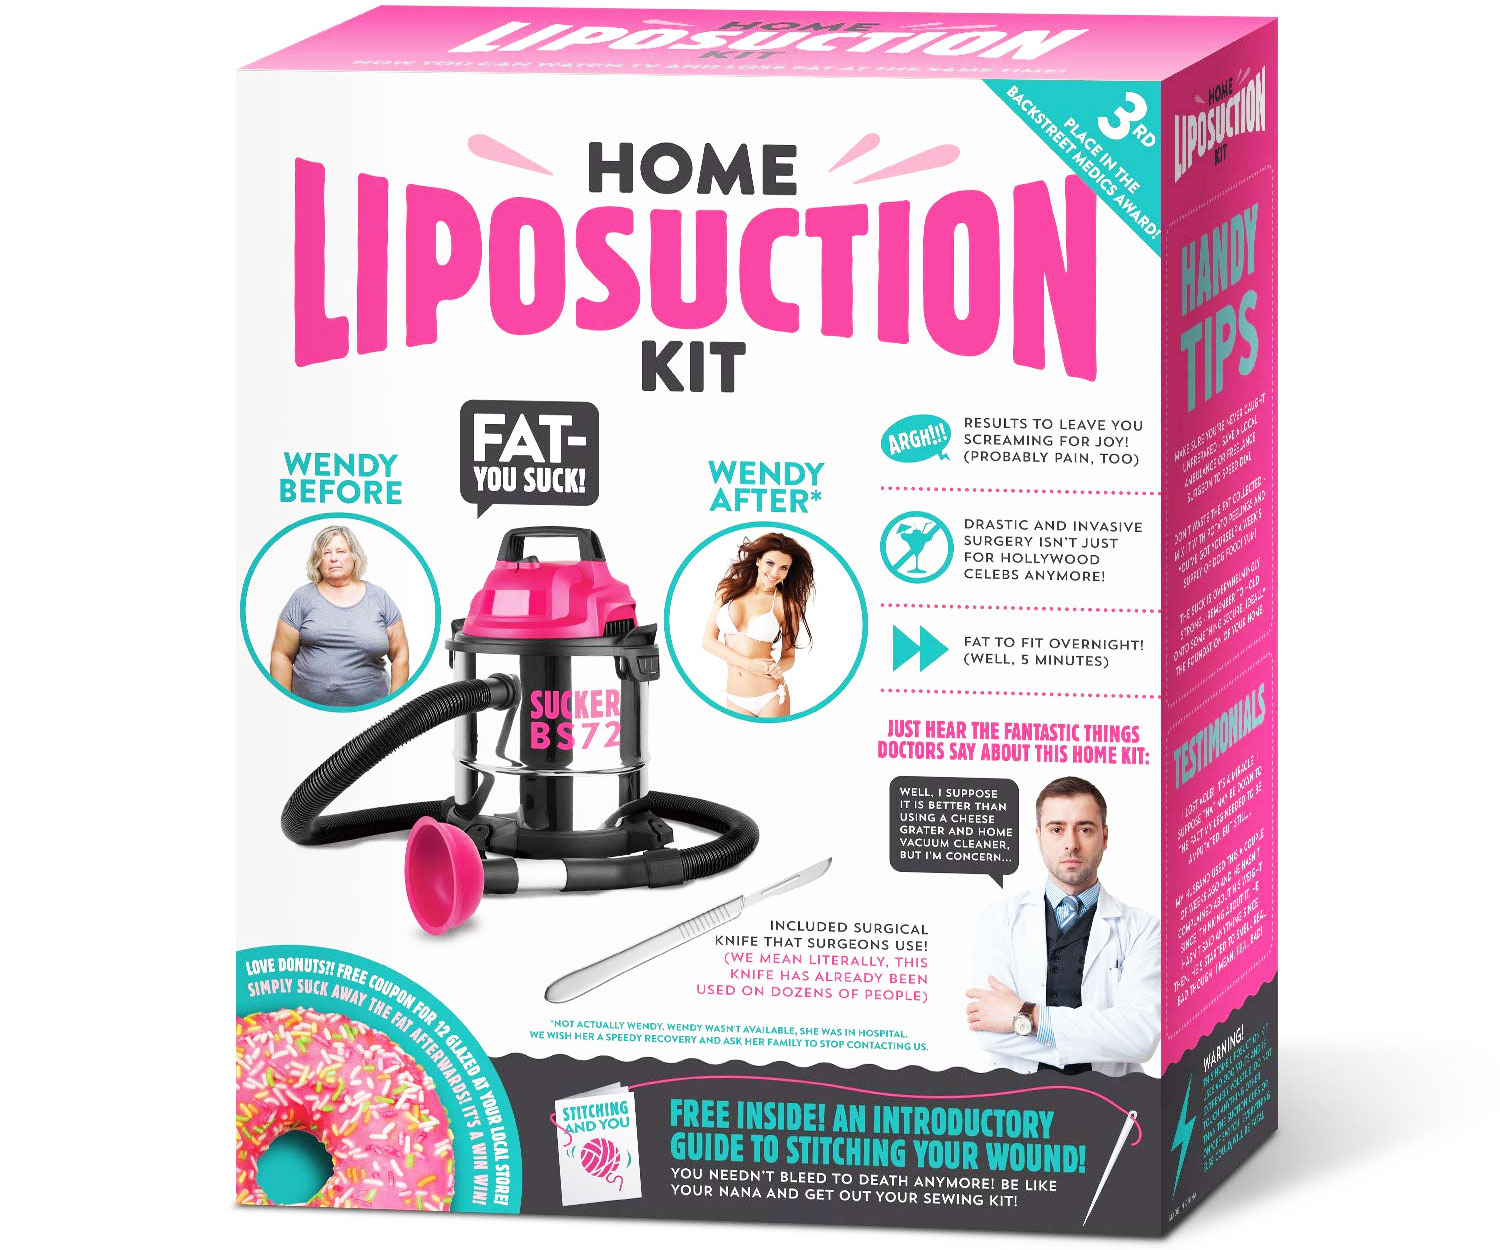 Home Liposuction Kit